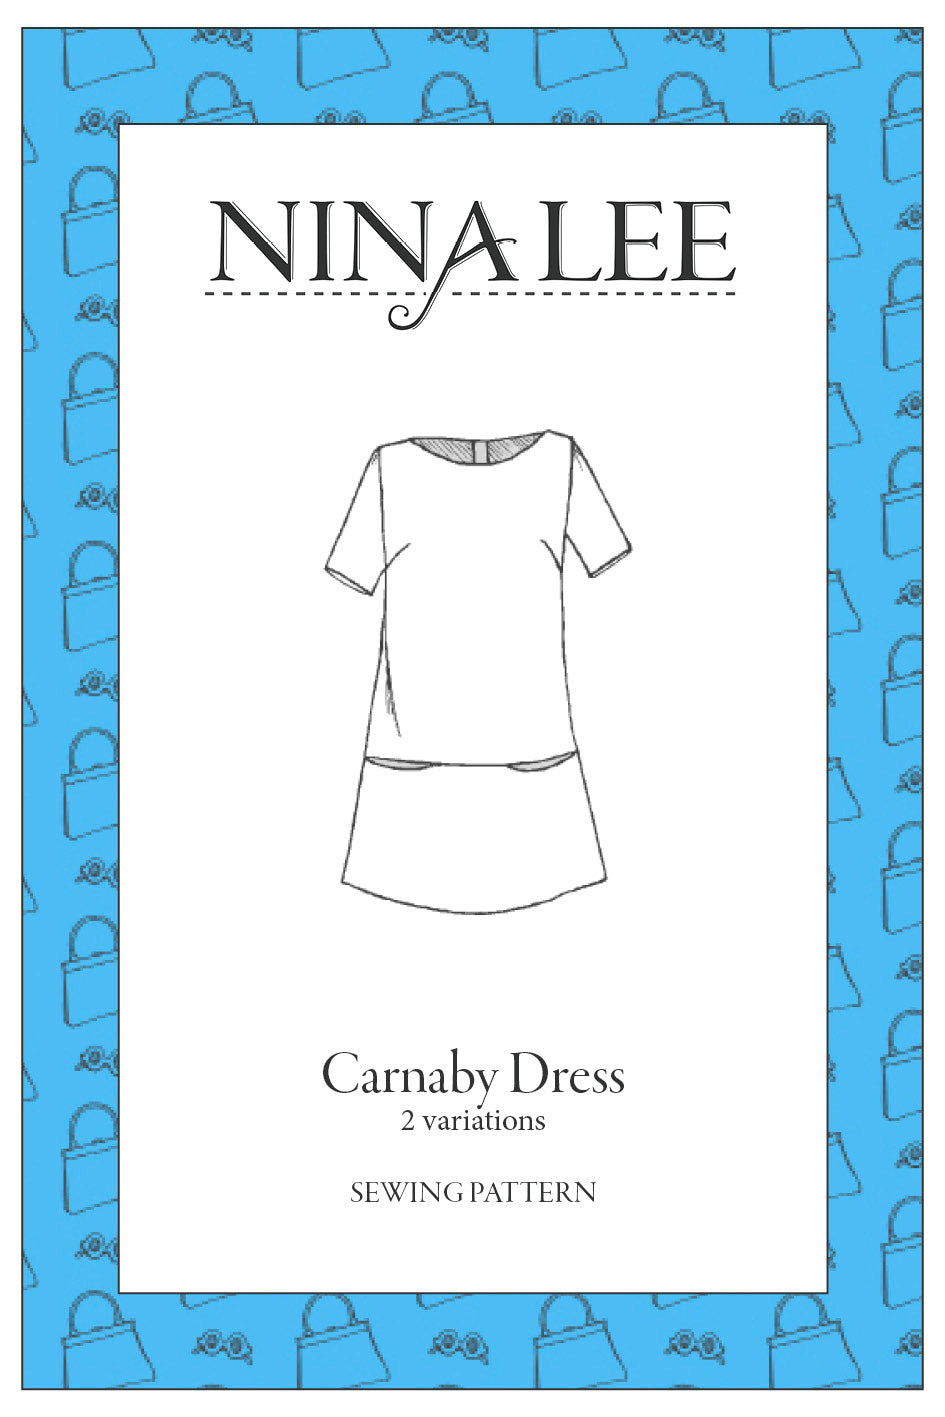 NINALEE Carnaby Dress Sewing Pattern